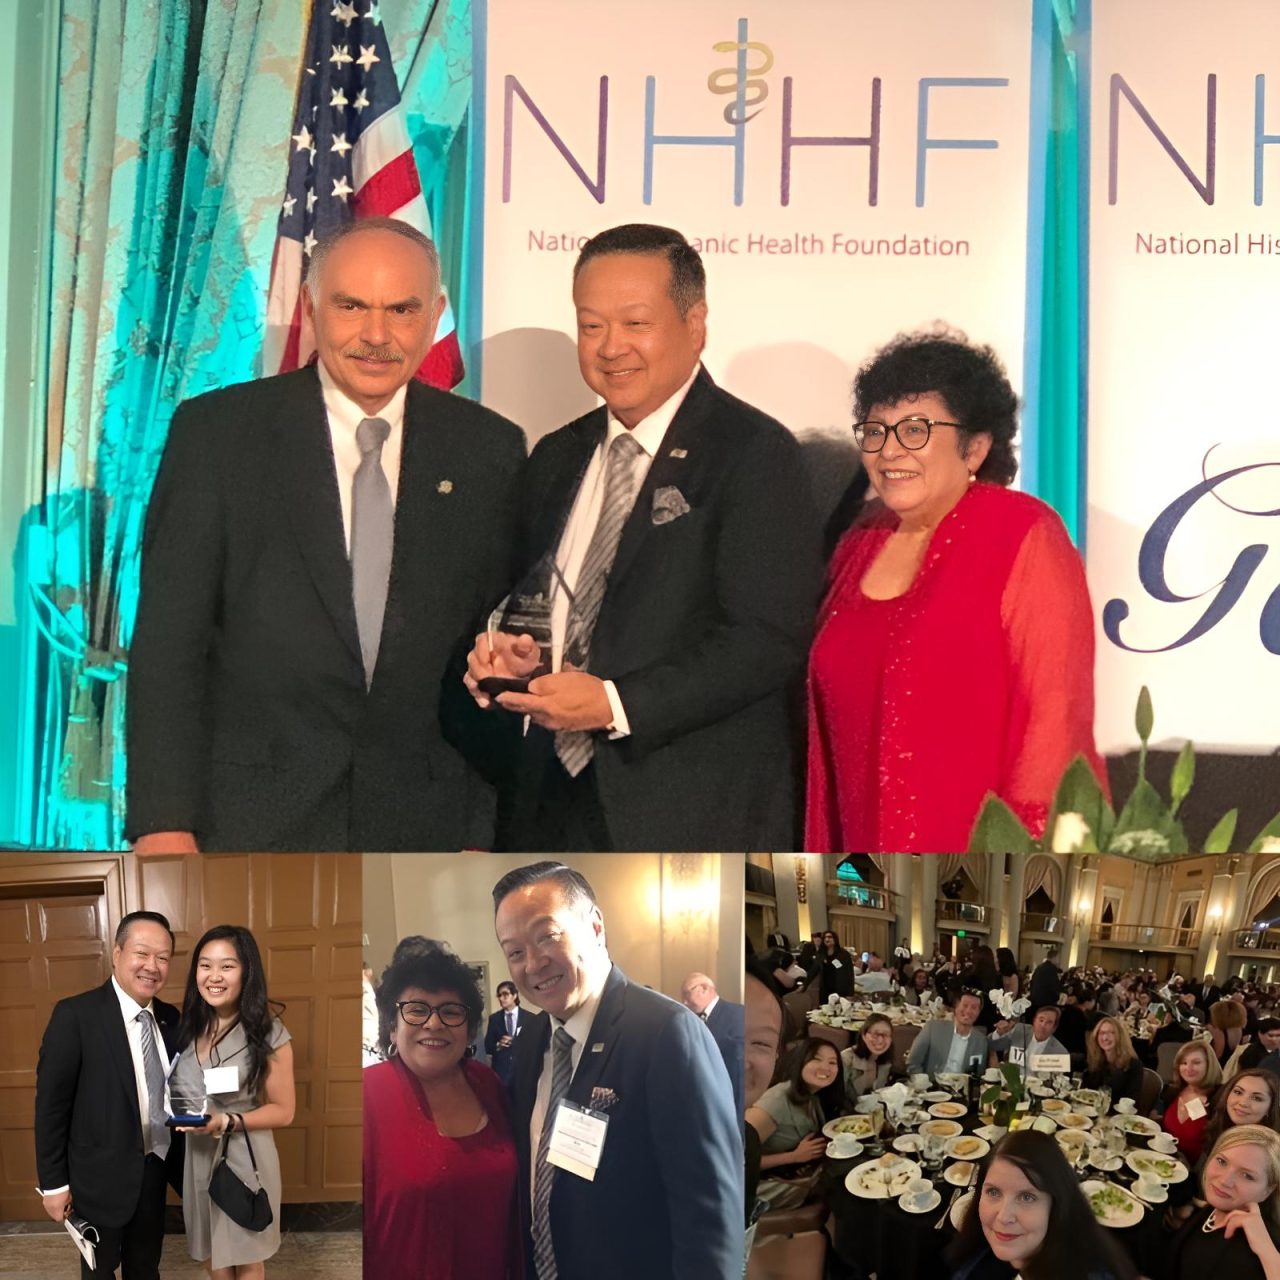 Ed Kim: Thank you to the National Hispanic Health Foundation for the leadership award at the 16th annual California Hispanic Health Professional Student Scholarship Gala